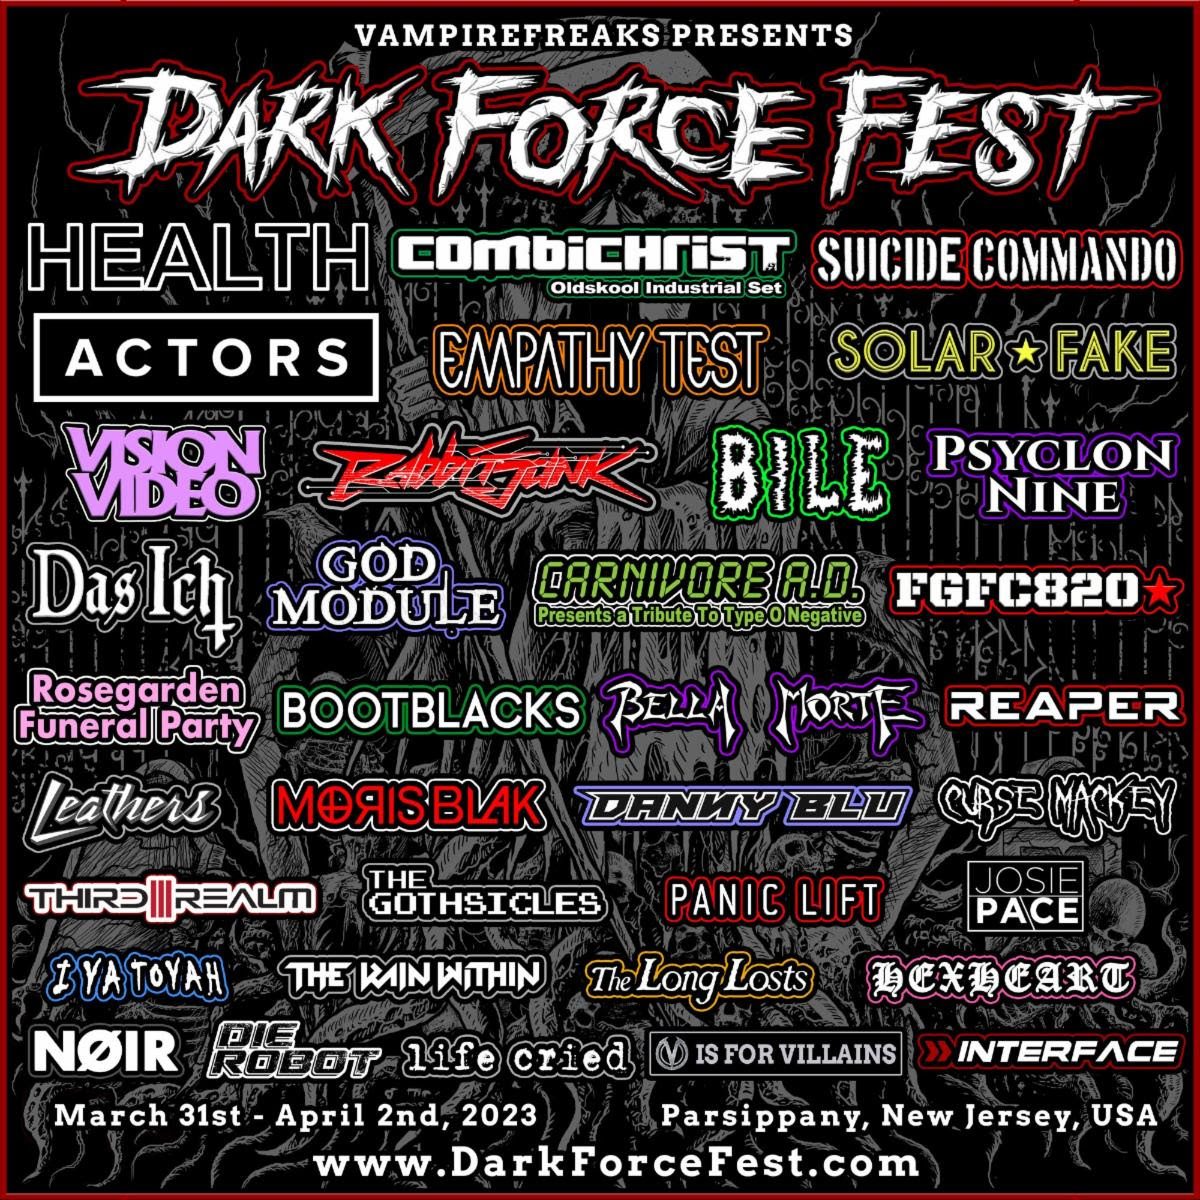 Dark Force Fest Announces 2023 Lineup Featuring Health, Combichrist